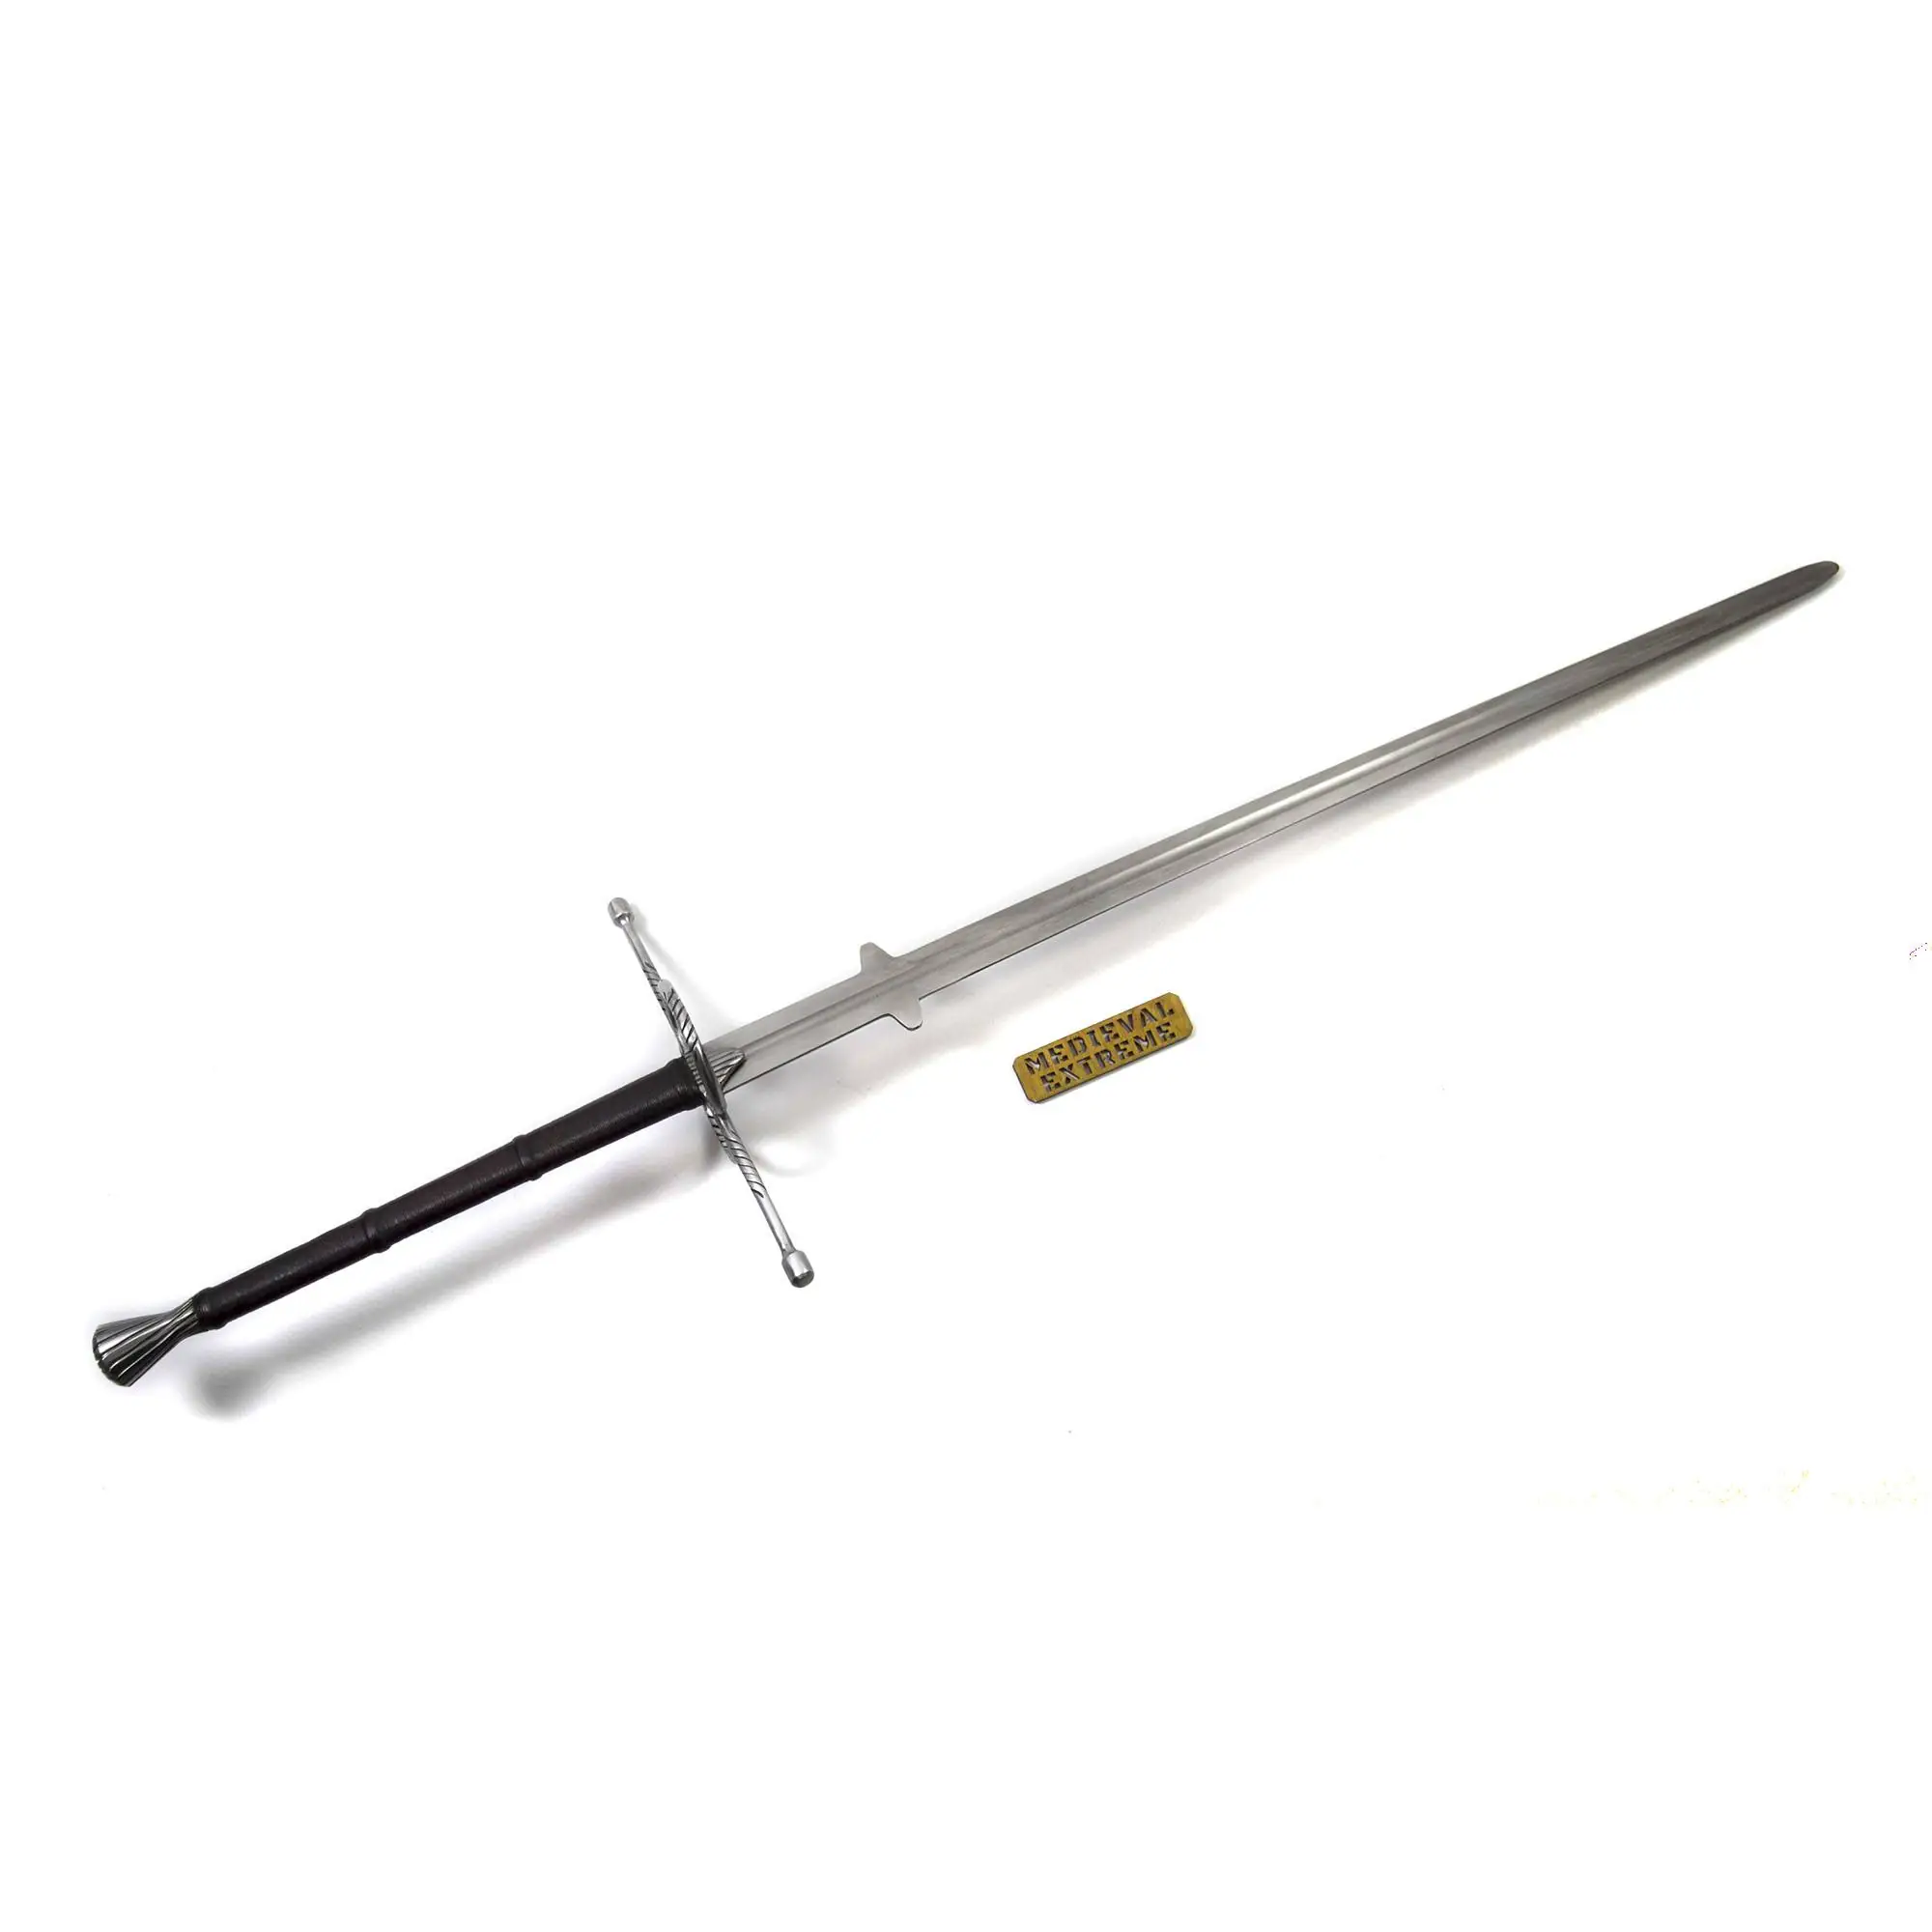 Advanced Zweihander two-handed sword